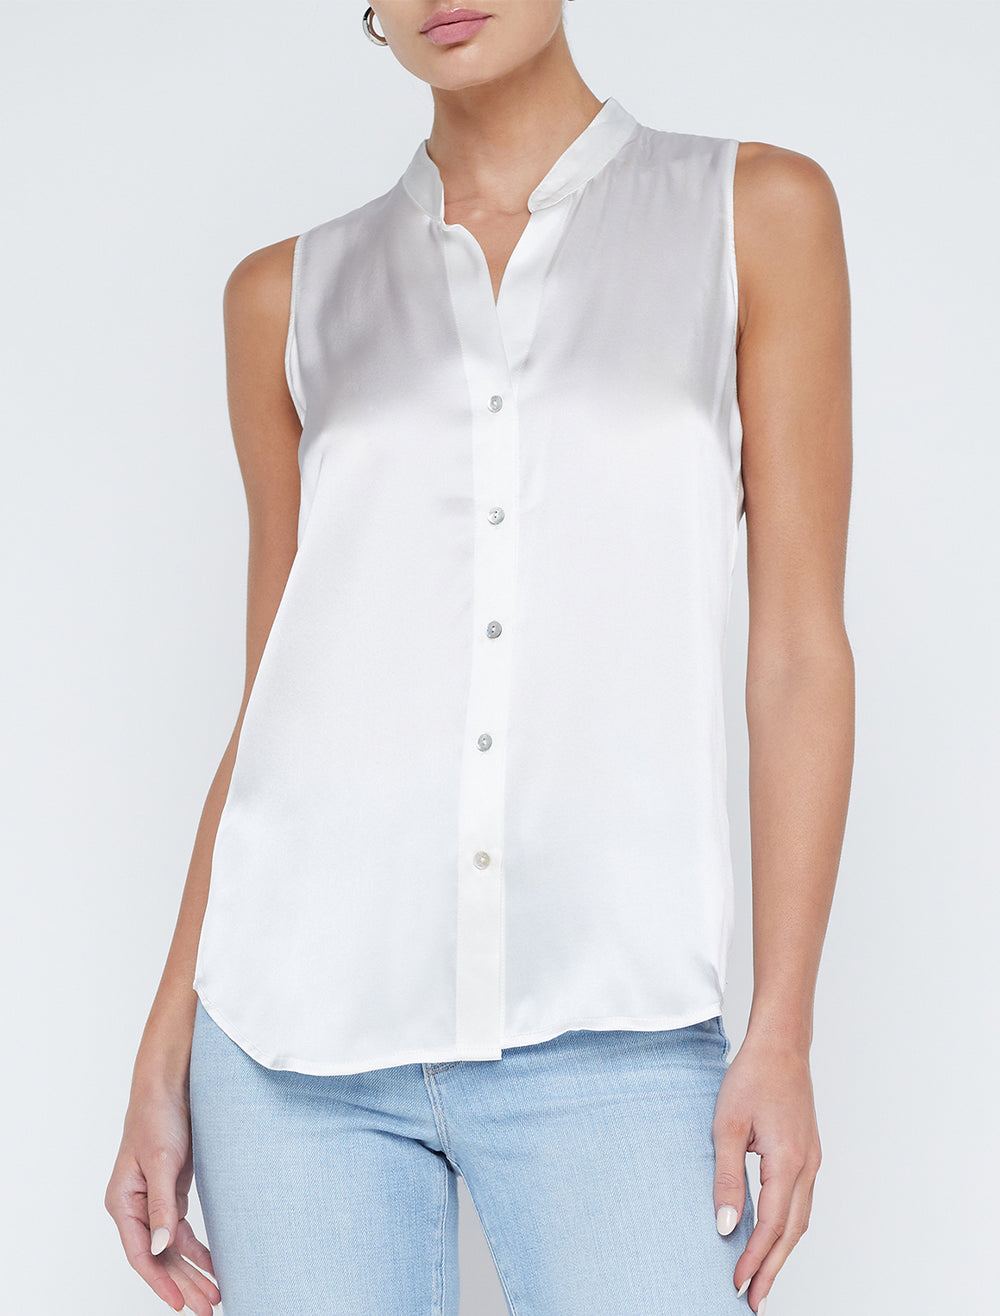 Model wearing L'agence's hendrix band collar sleeveless blouse in white.